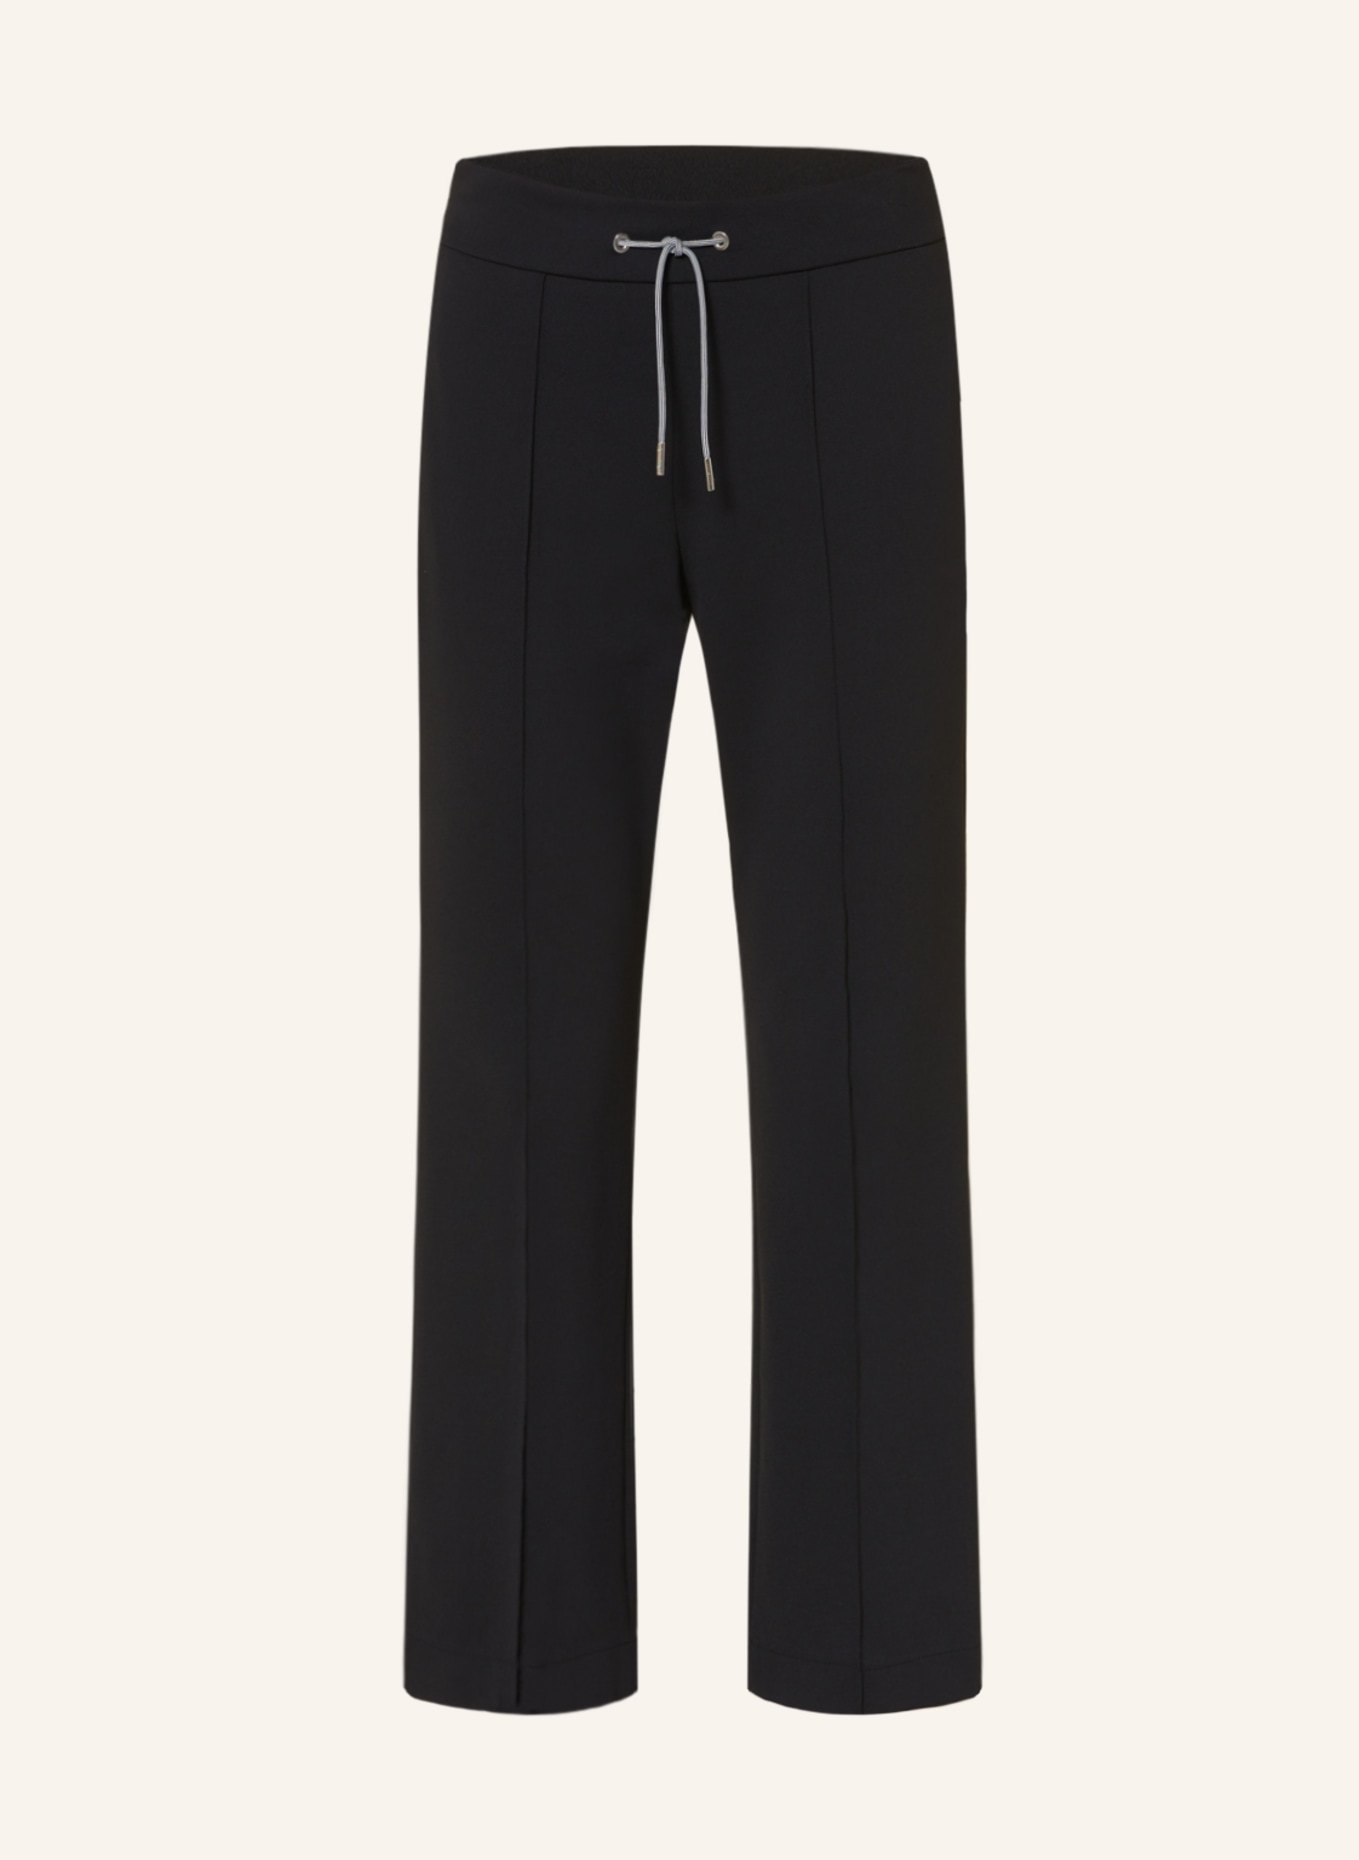 ULLI EHRLICH SPORTALM Pants in jogger style, Color: BLACK (Image 1)